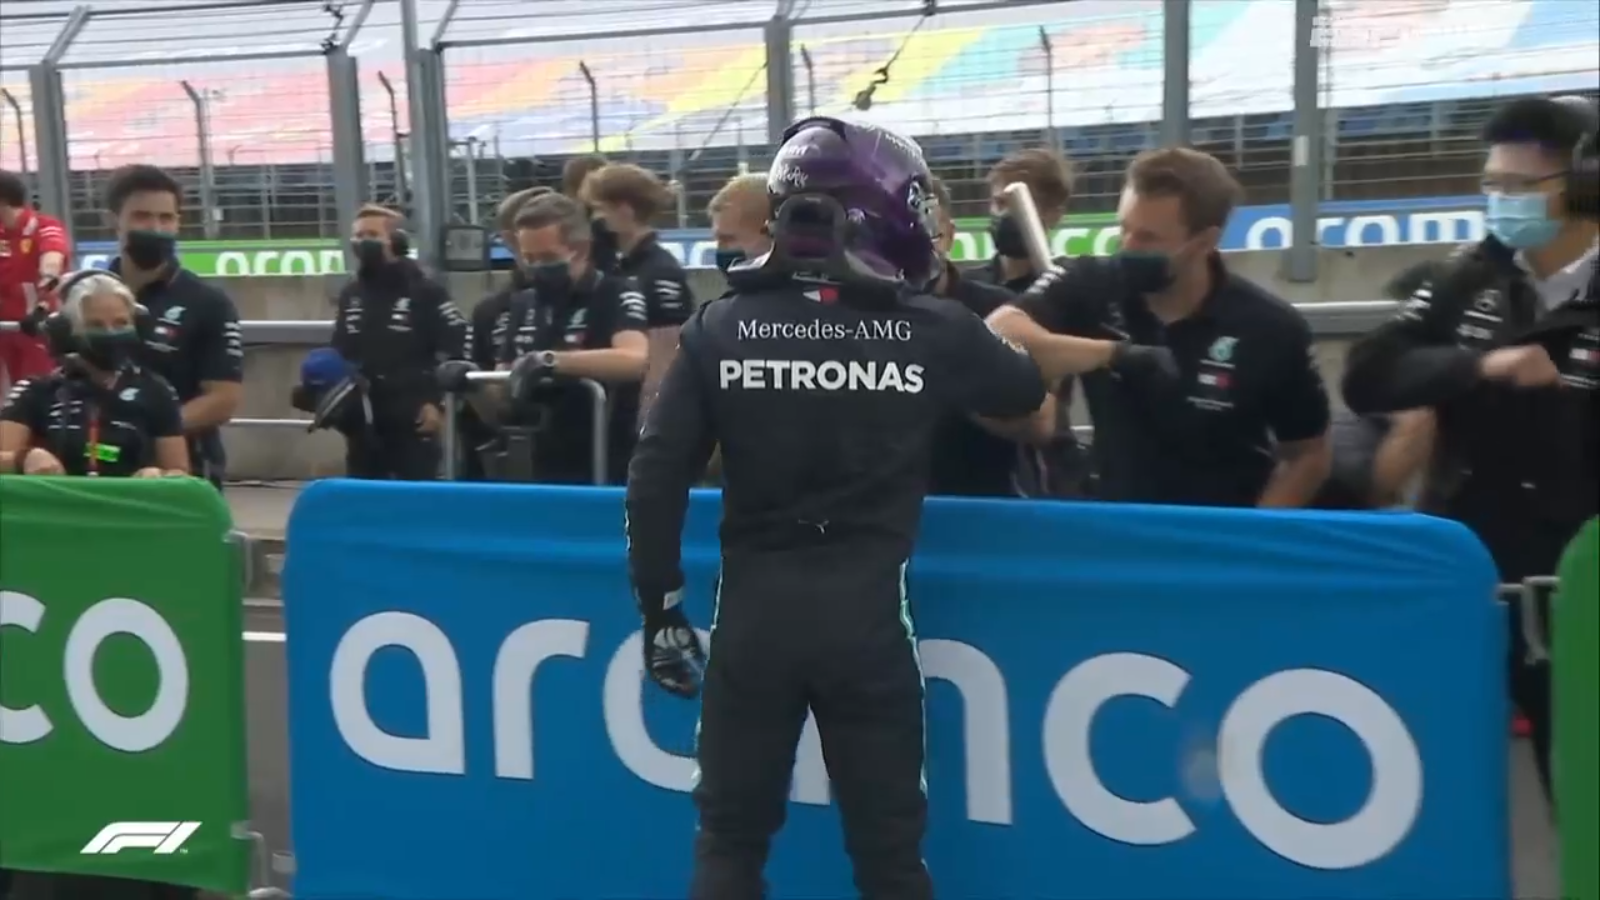 Lewis Hamilton, doing socially correct Covid-19 elbow bumping, celebrates with the Mercedes-AMG team.